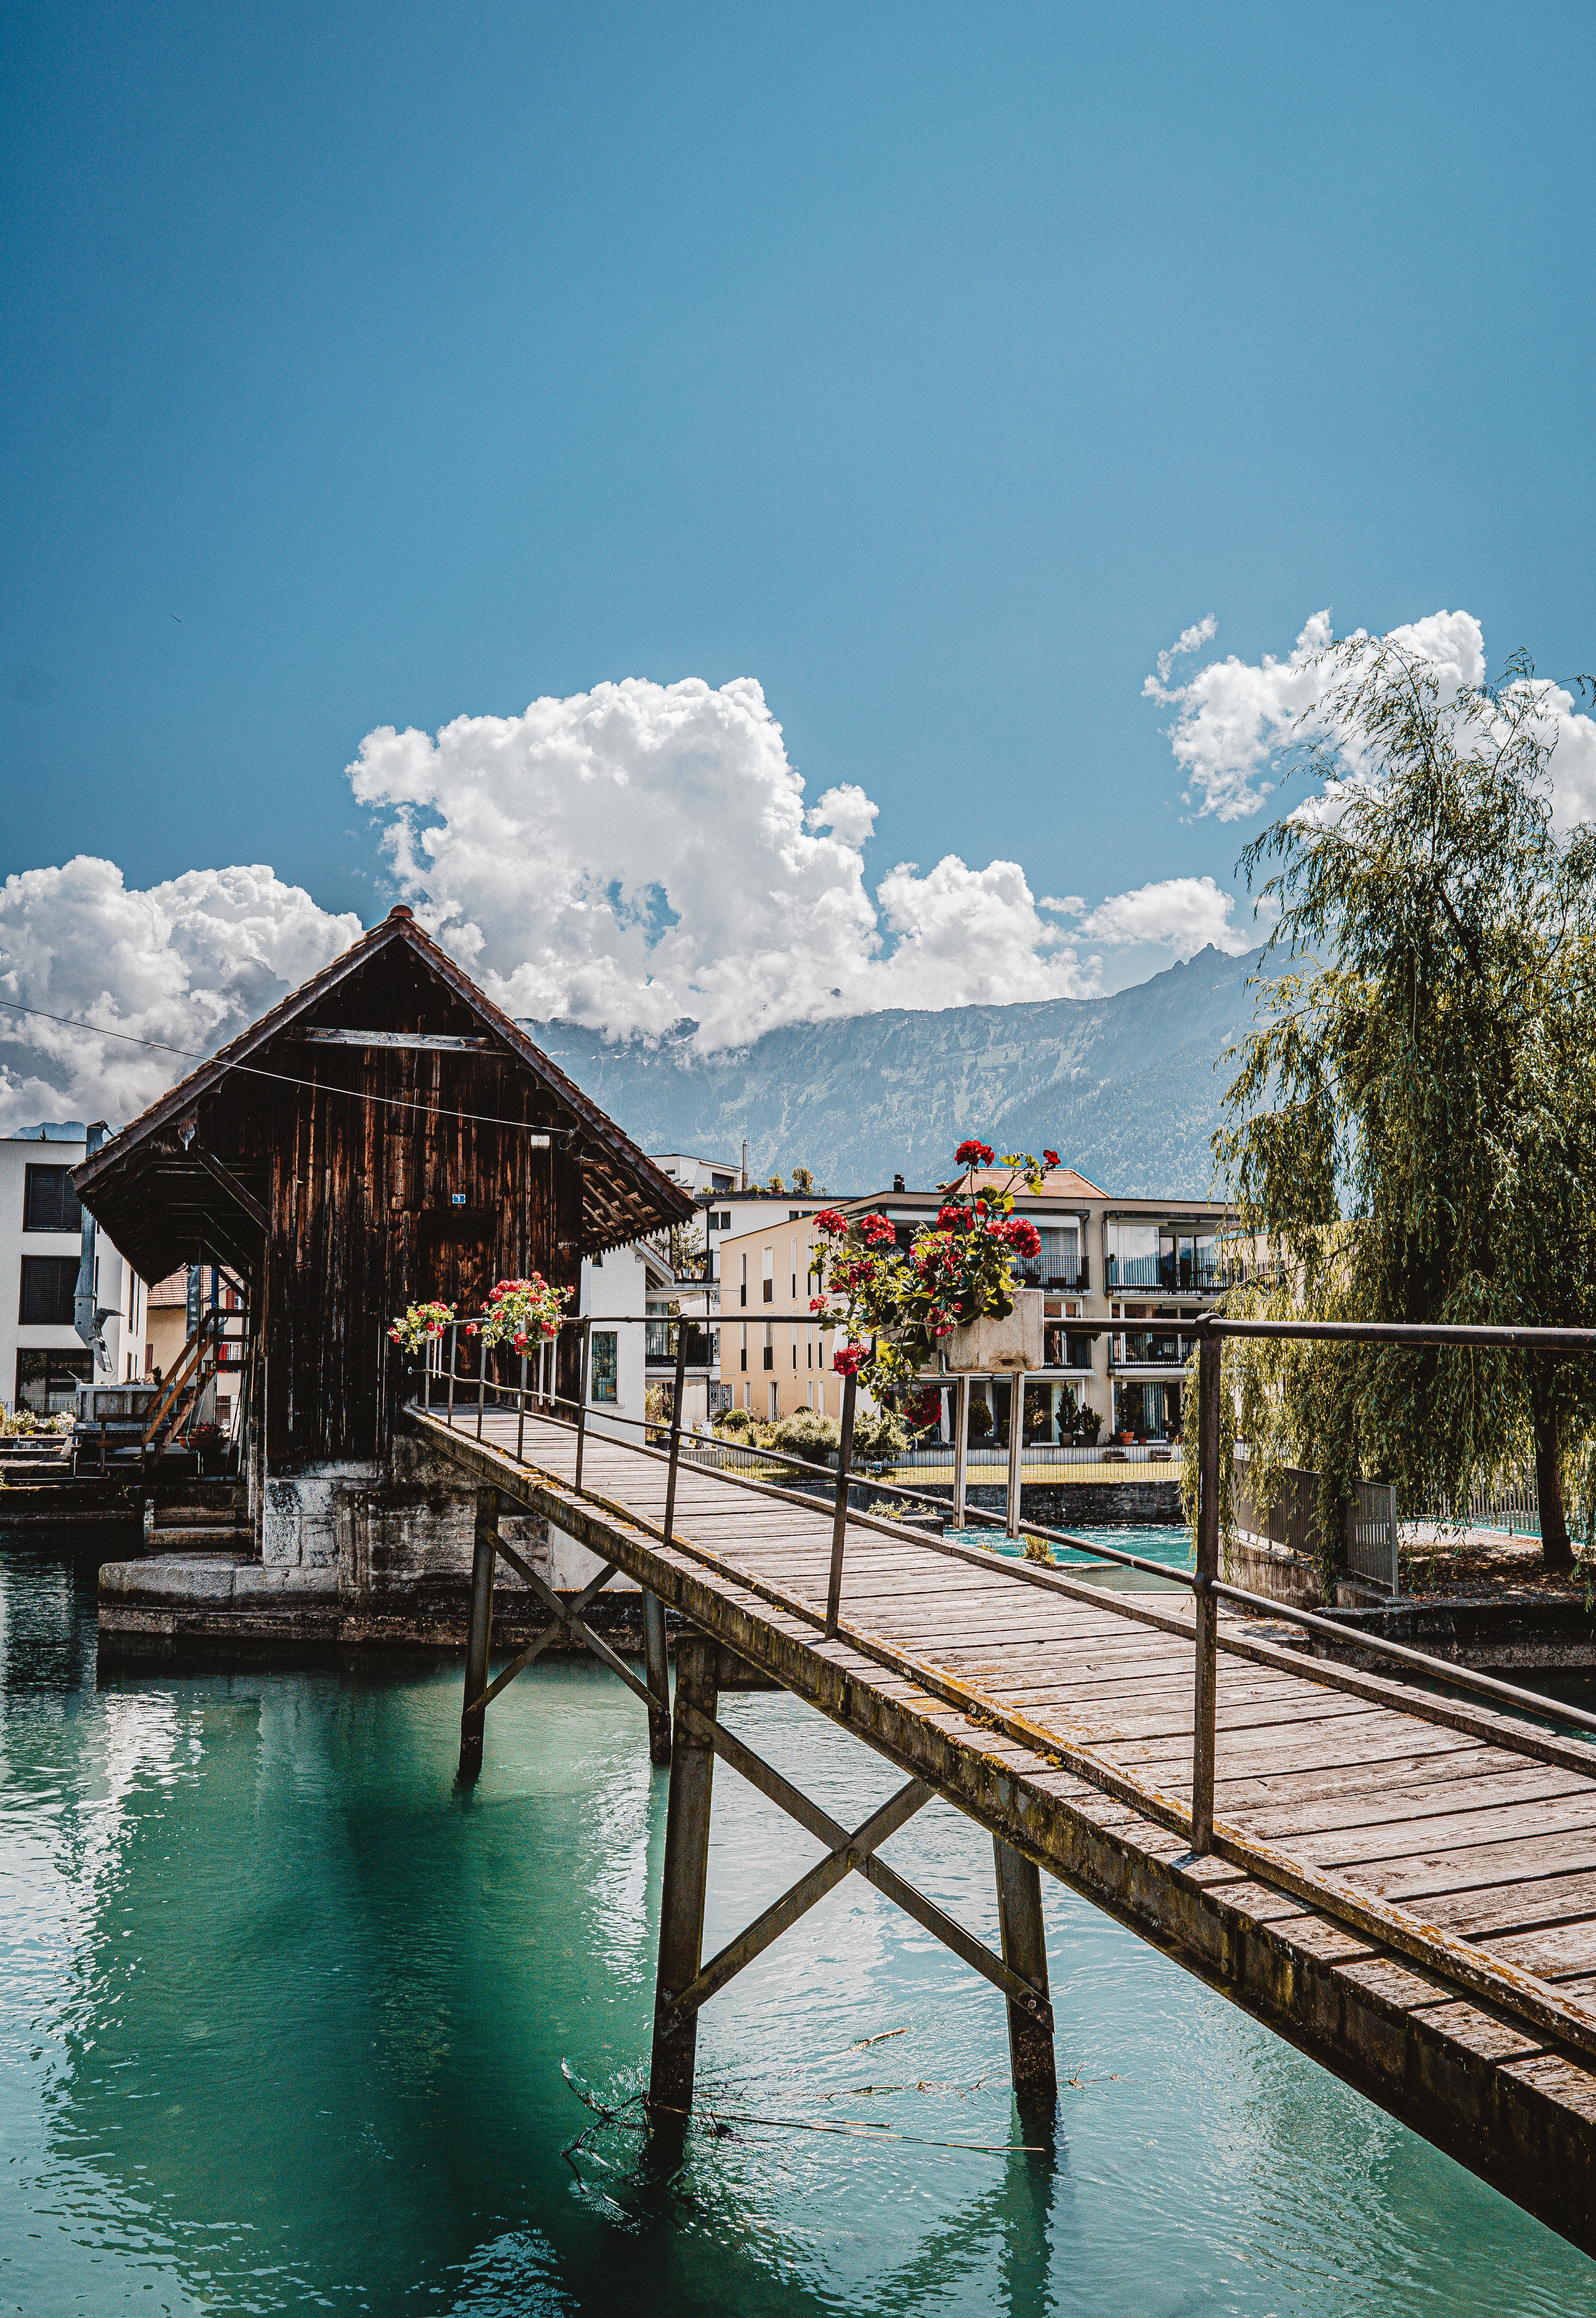 20 Things to do in Interlaken, Switzerland